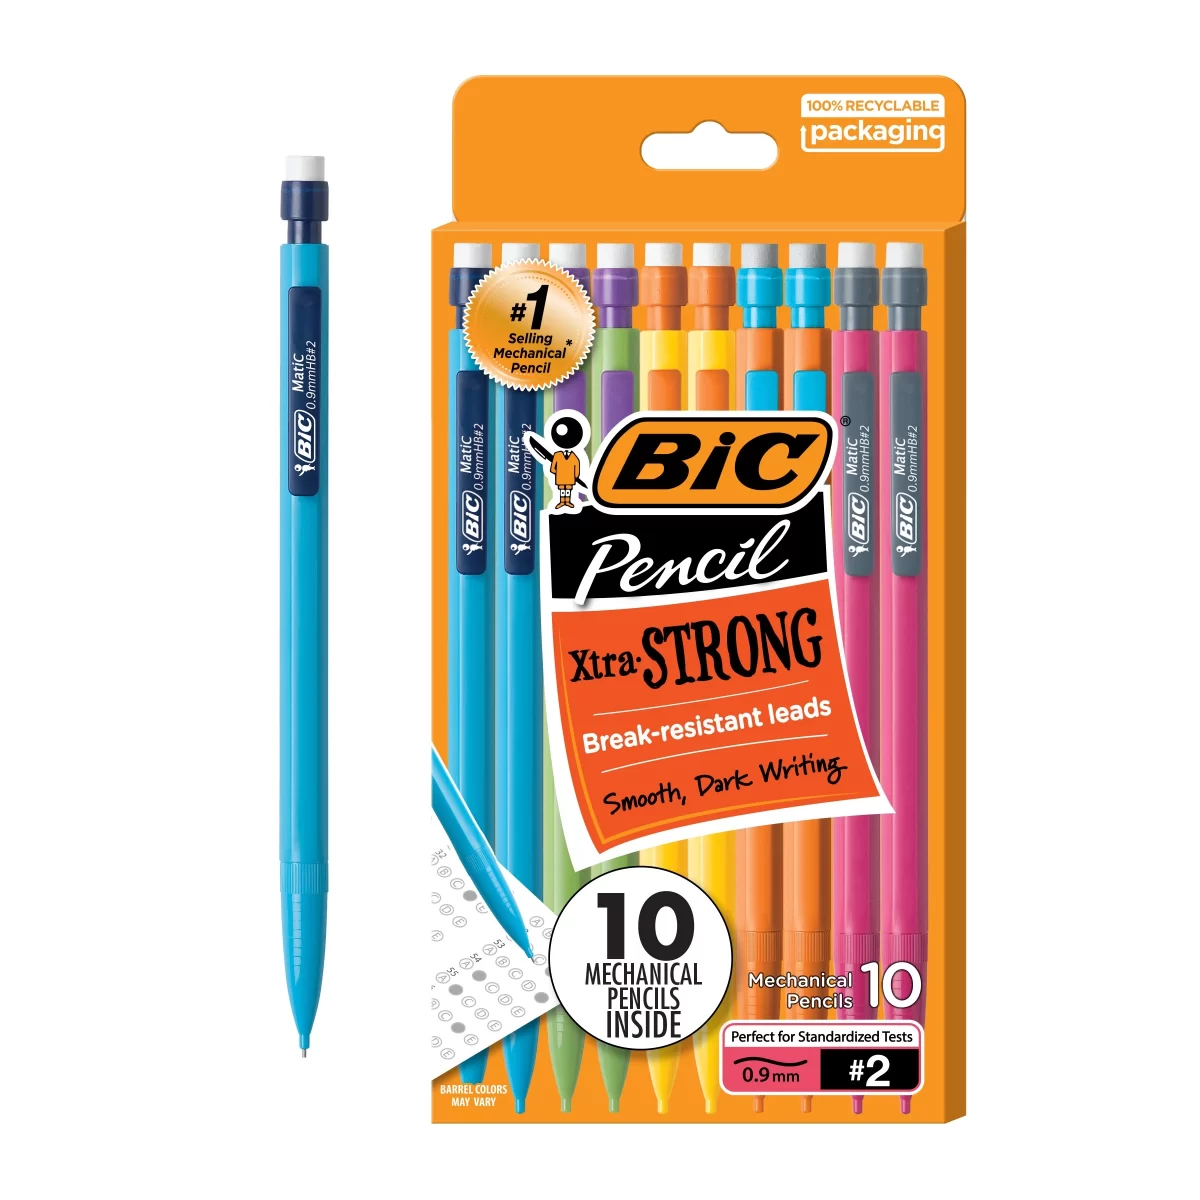 Regular Pencils vs Mechanical Pencils